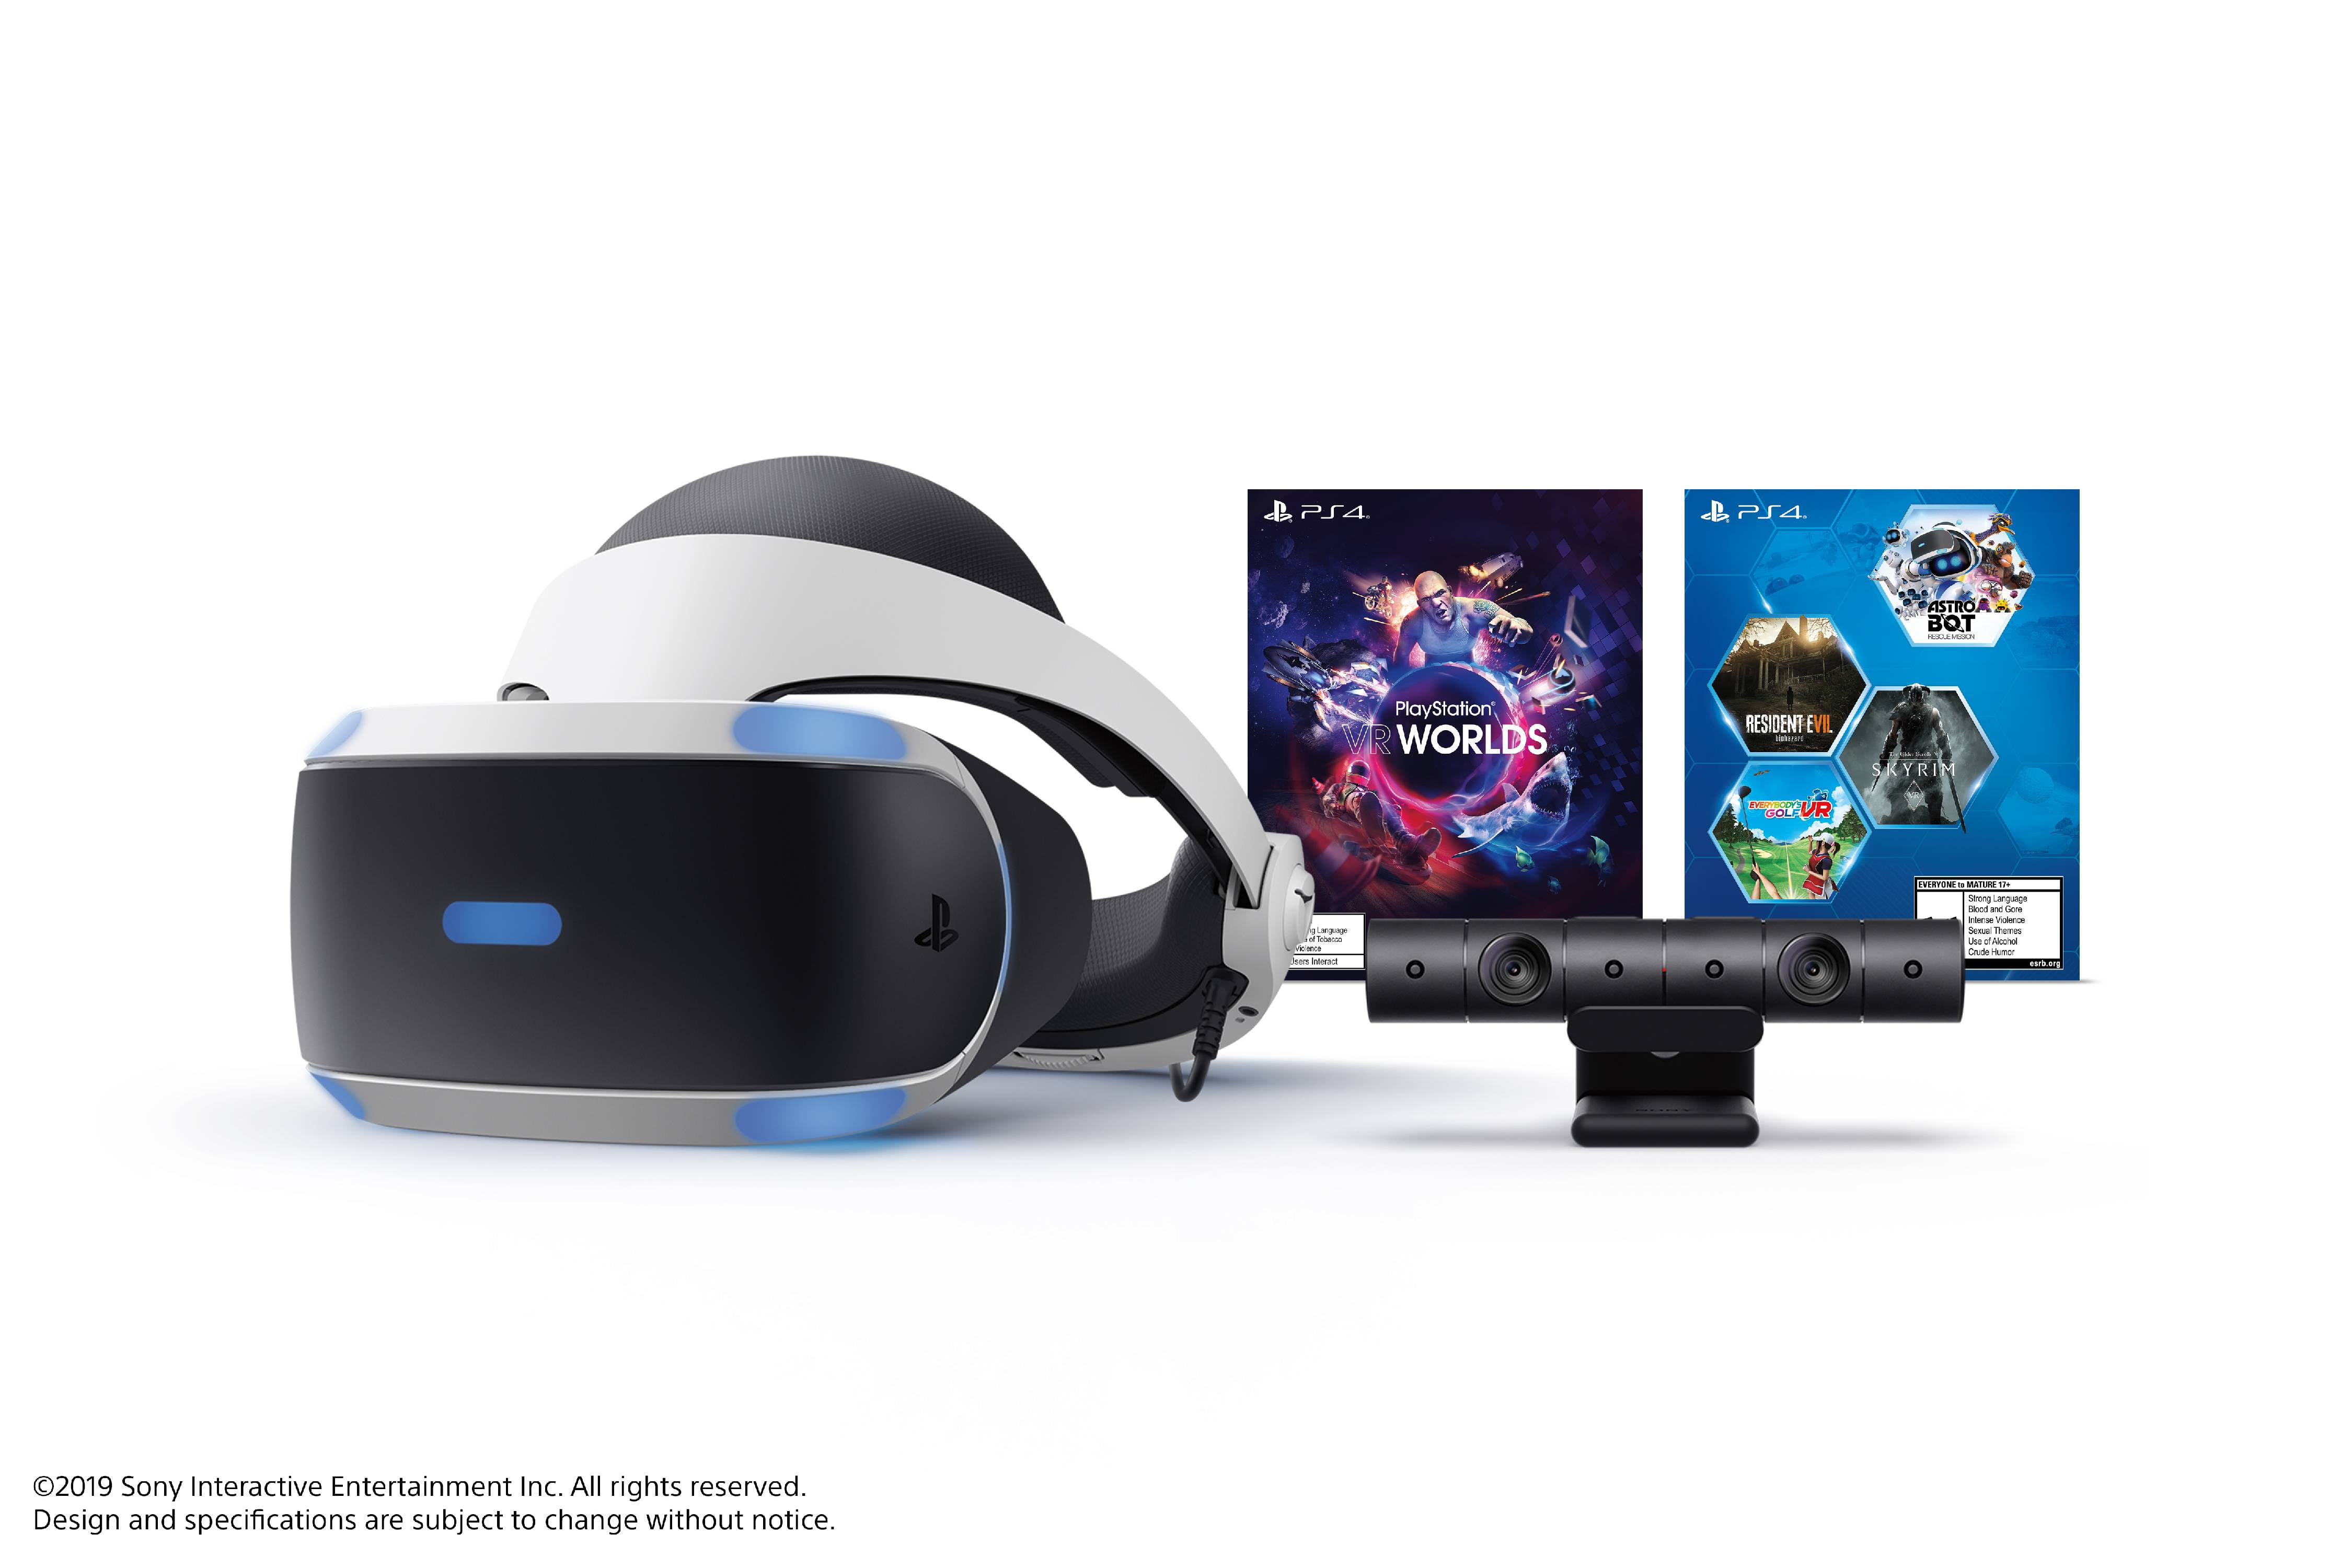 Oculus Quest 64GB VR Headset - Walmart.com